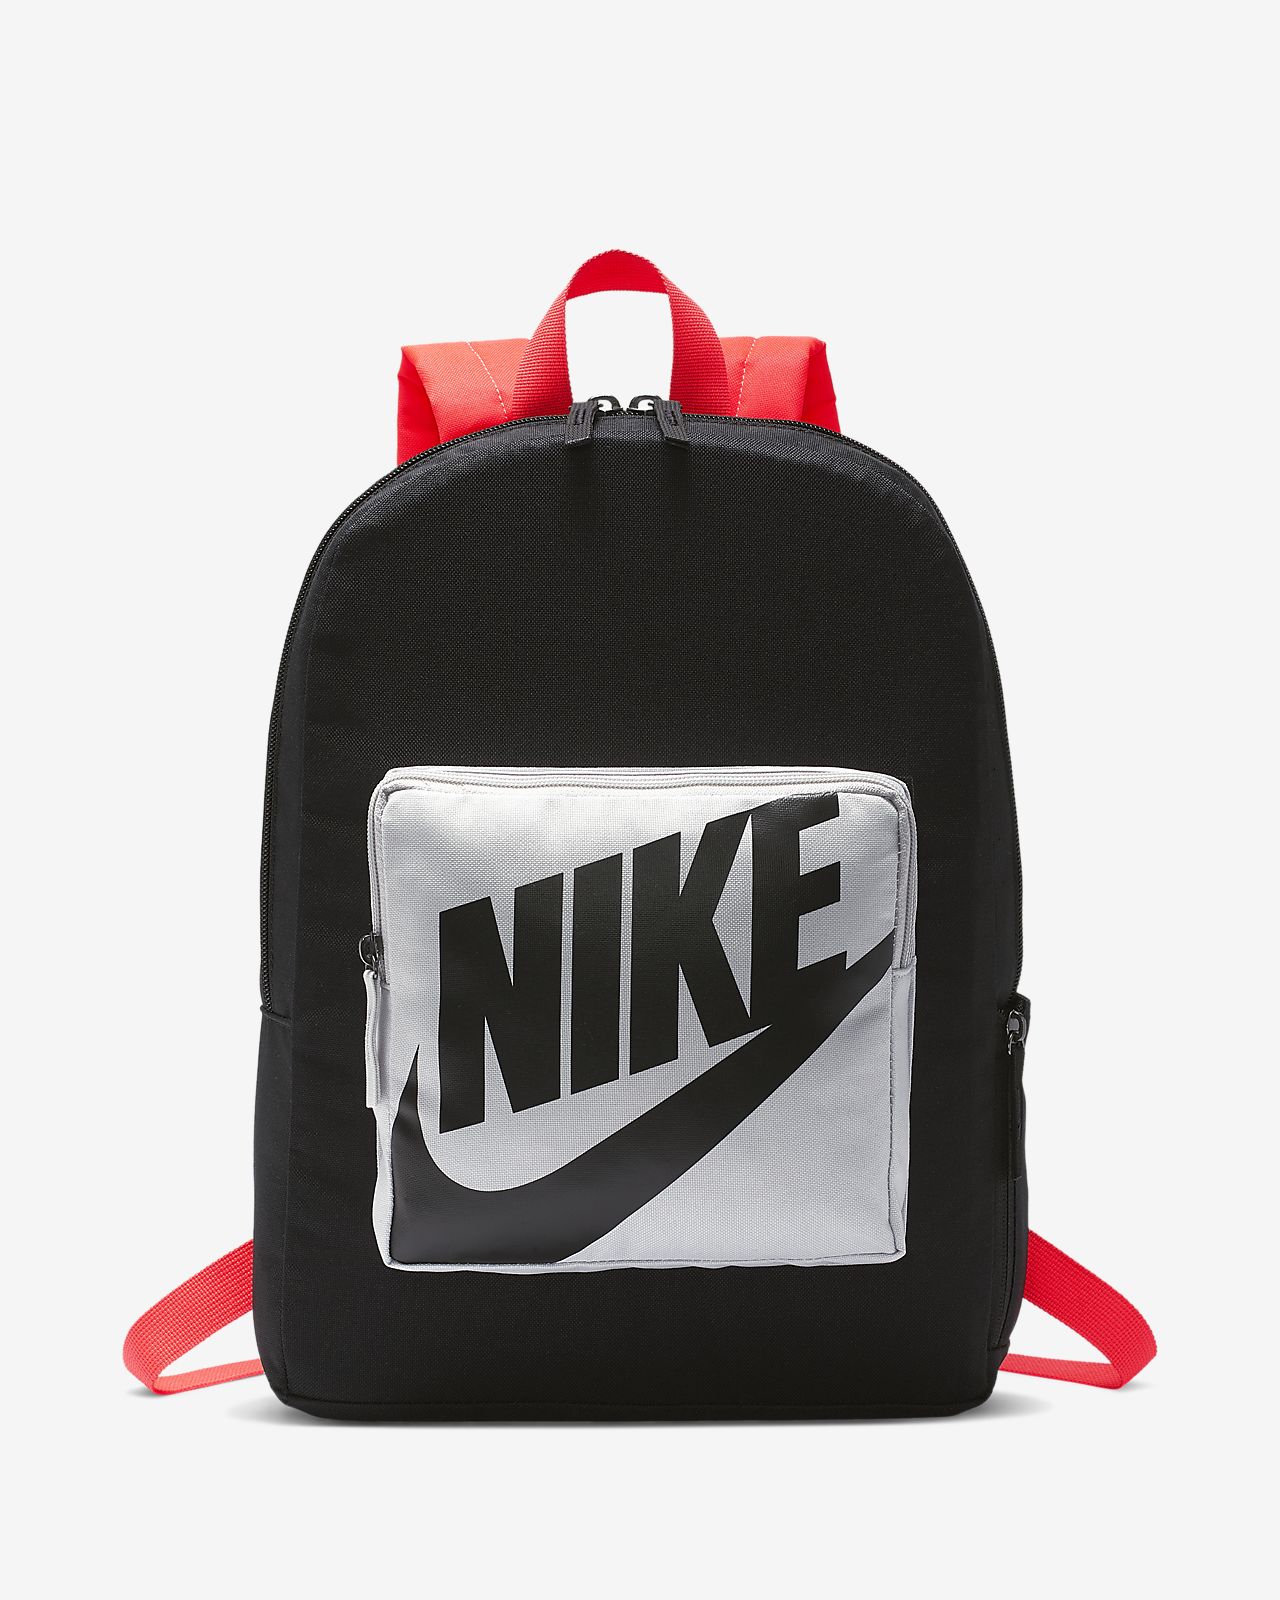 nike backpack deals